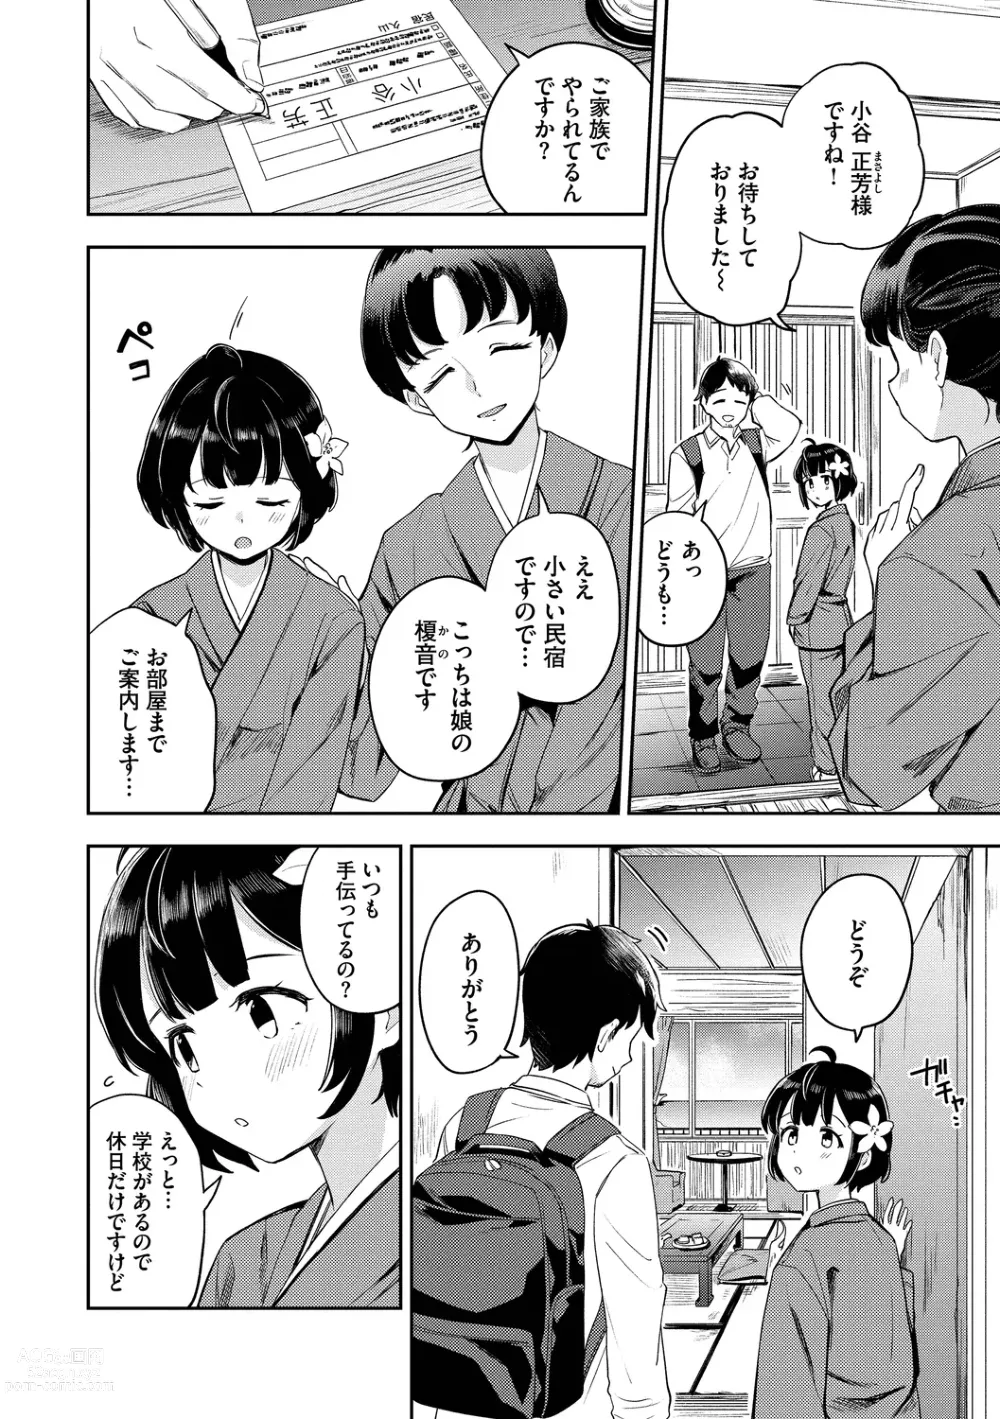 Page 4 of manga Secret Time